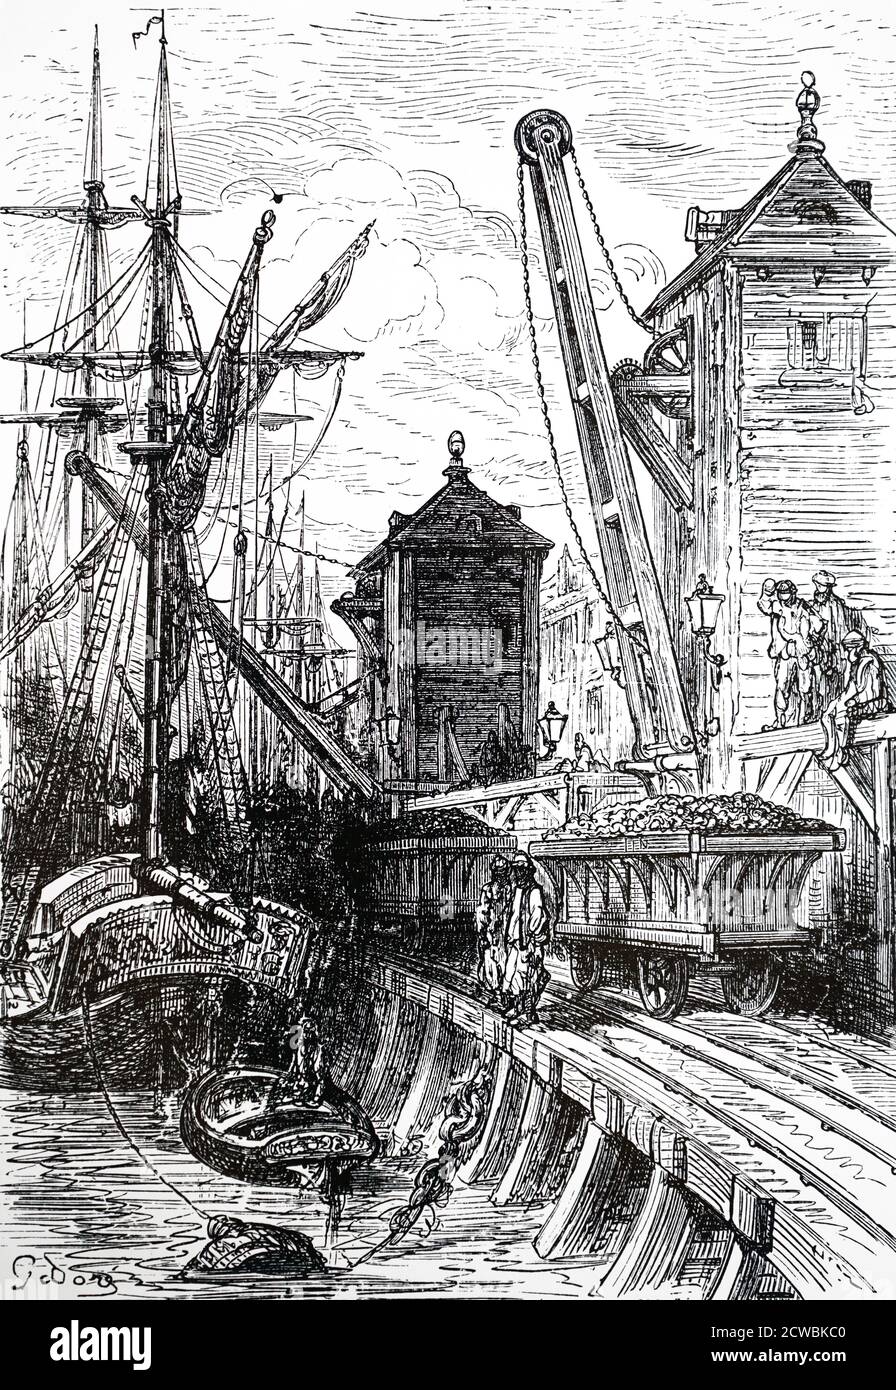 Engraving depicting Poplar Docks, London. Stock Photo